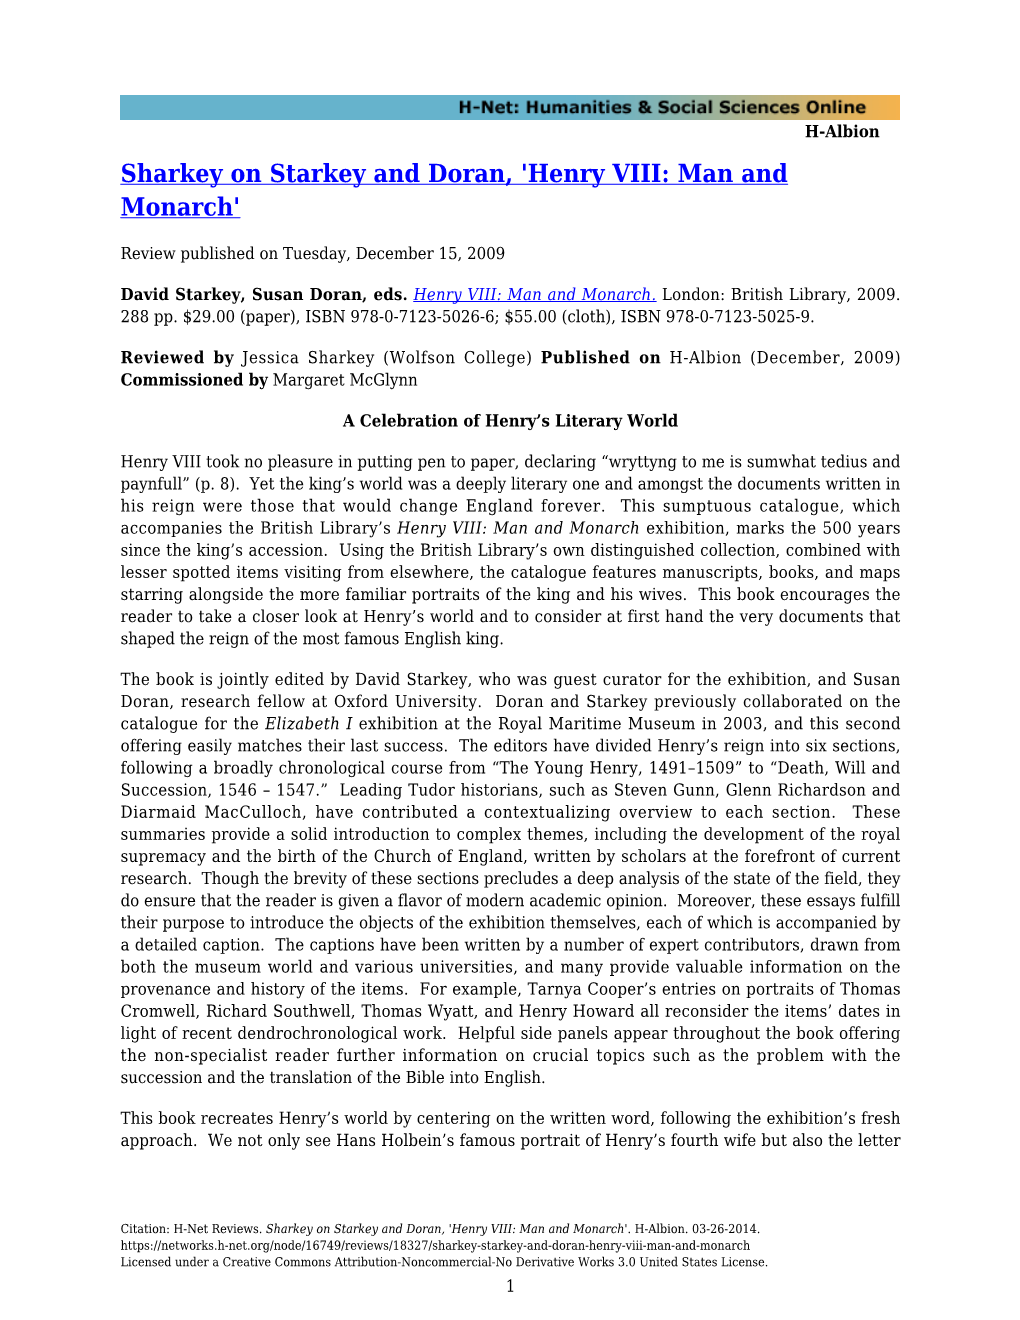 Sharkey on Starkey and Doran, 'Henry VIII: Man and Monarch'